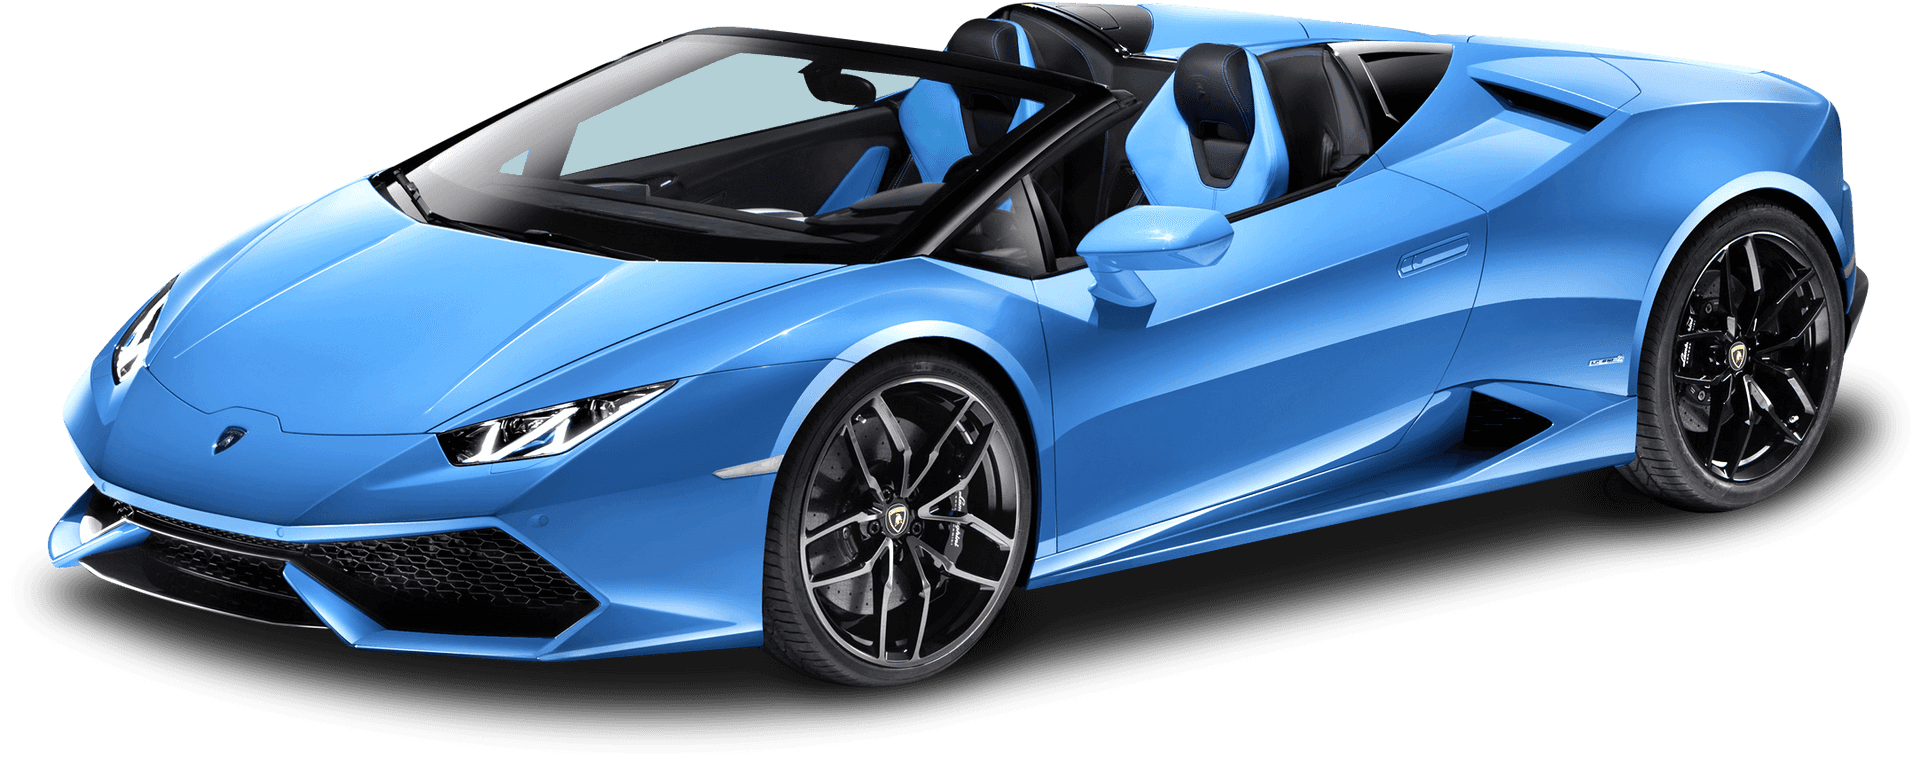 Blue Lamborghini Huracan Evo Spyder Profile View PNG